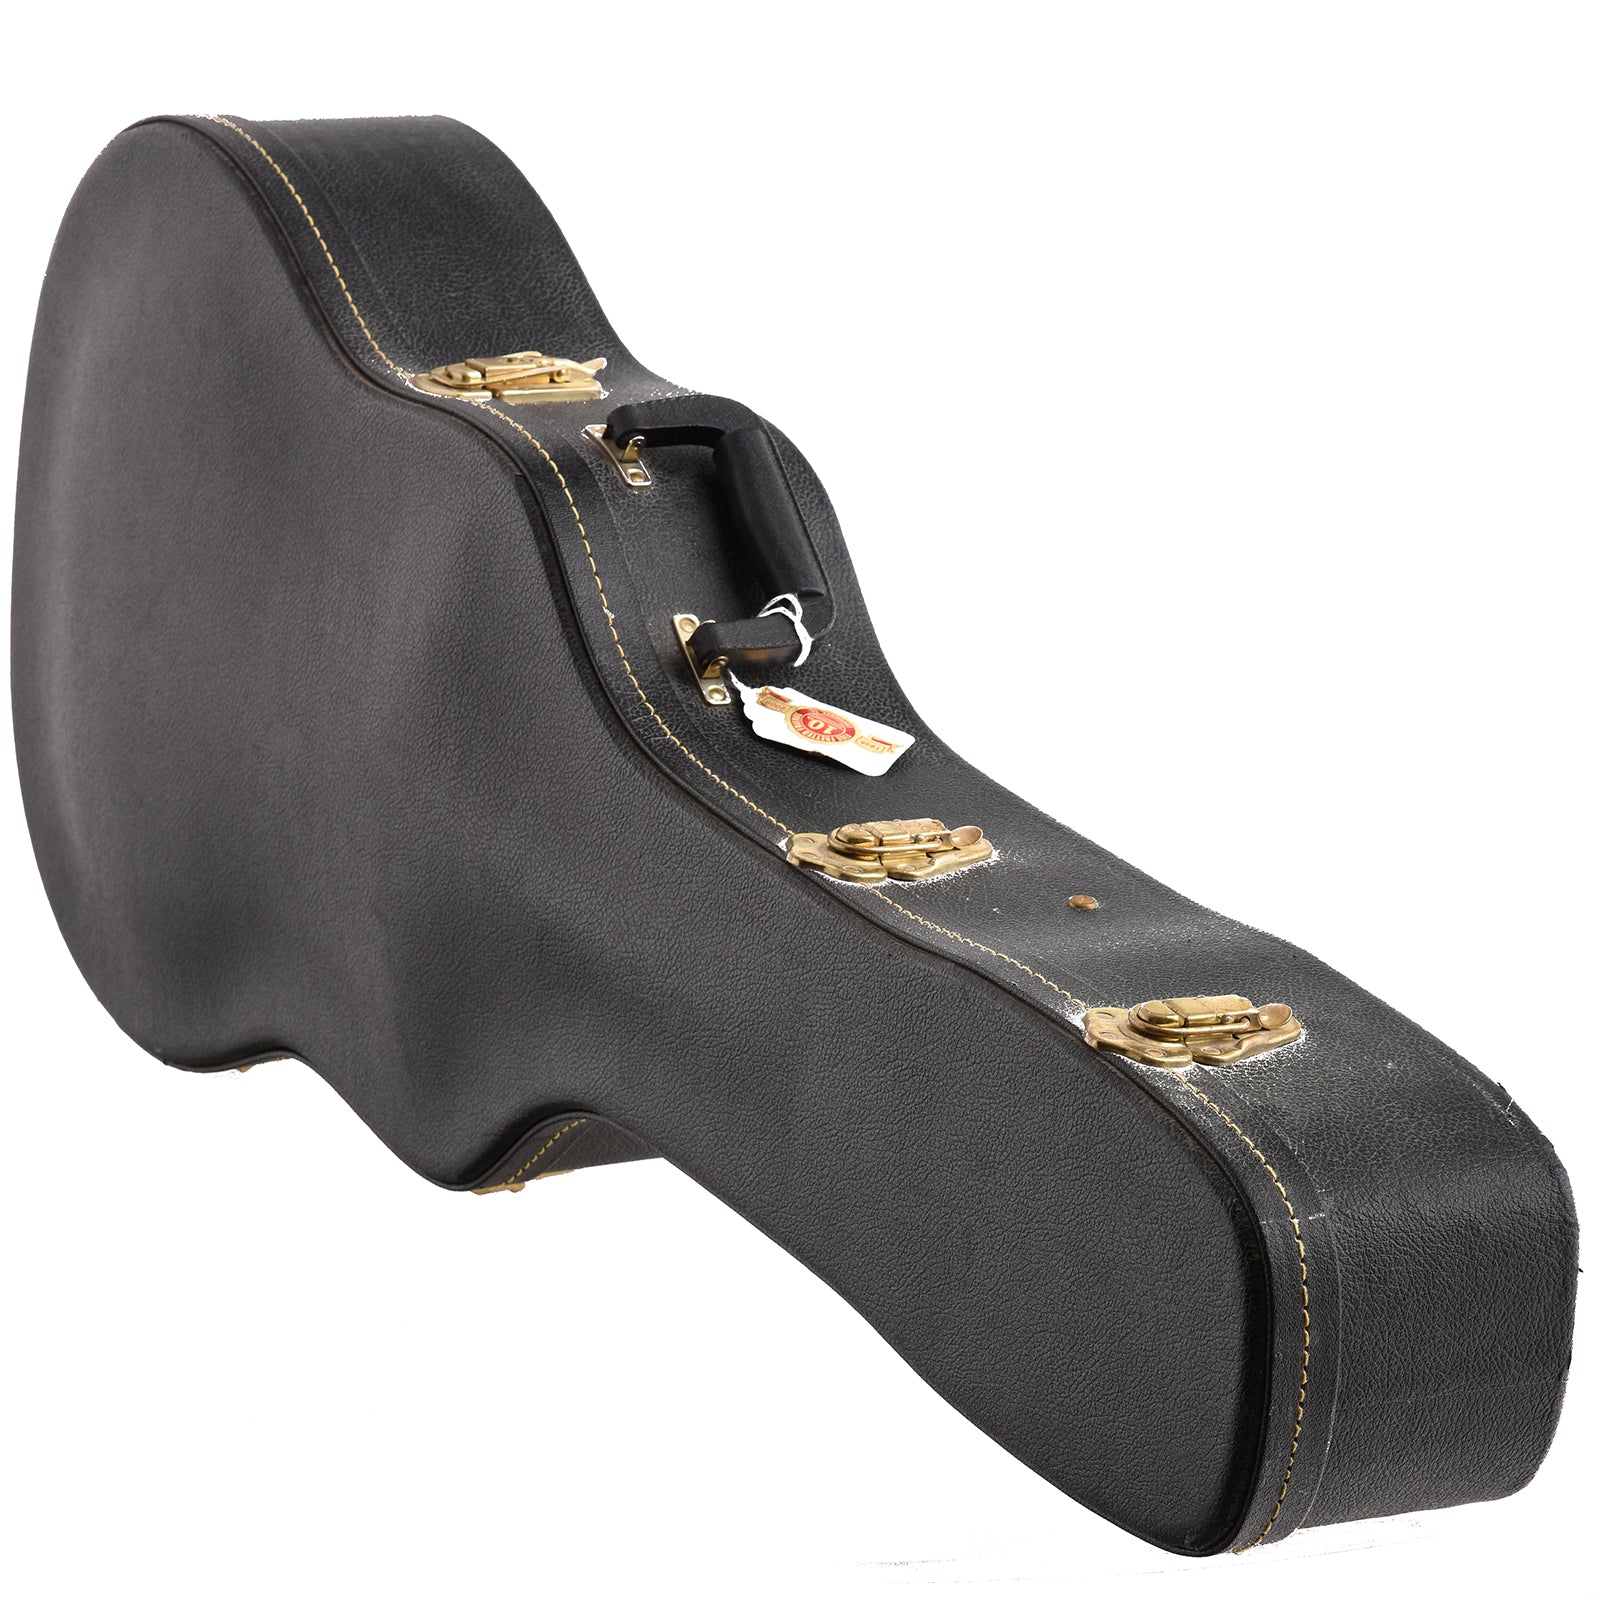 Image 14 of H.G. Leach "Kirby" Model (c.2002) - SKU# 20U-208177 : Product Type Flat-top Guitars : Elderly Instruments